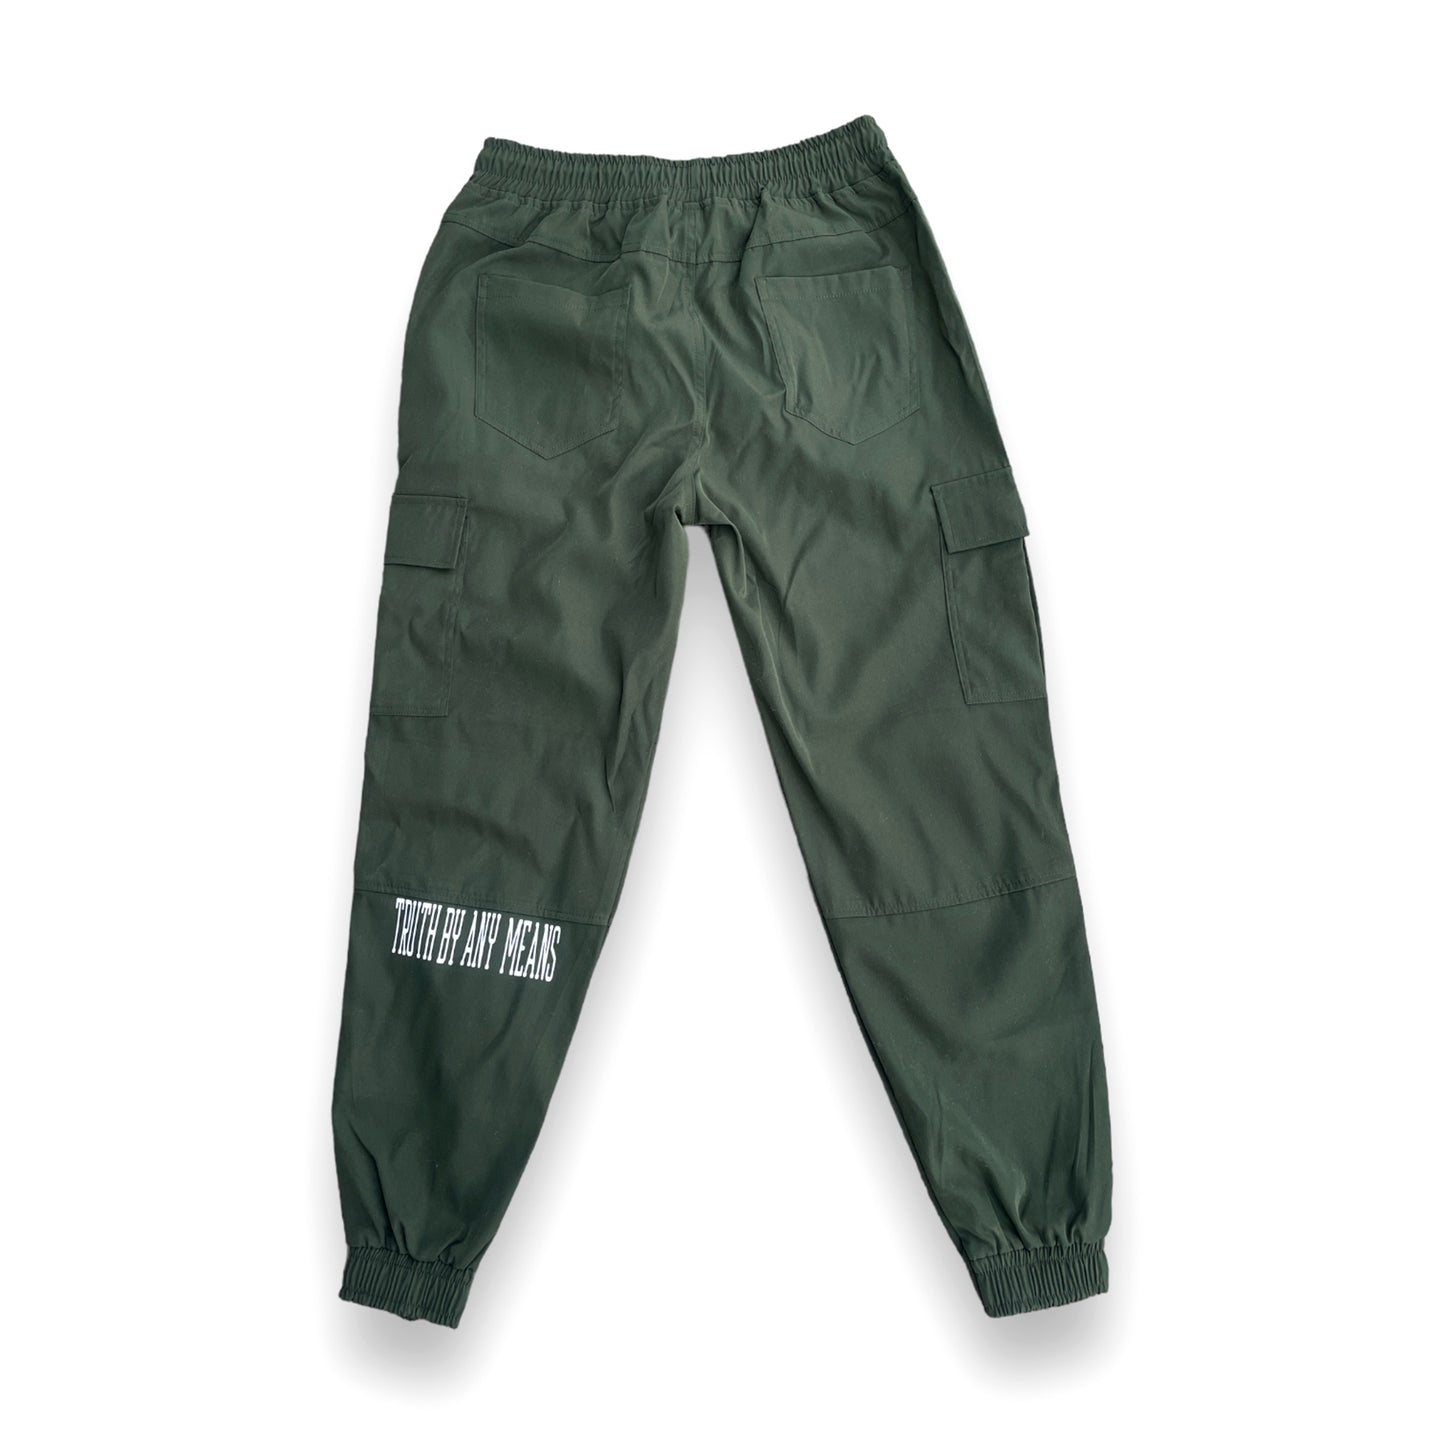 No Grey Reflective Cargo Pants (Army Green)